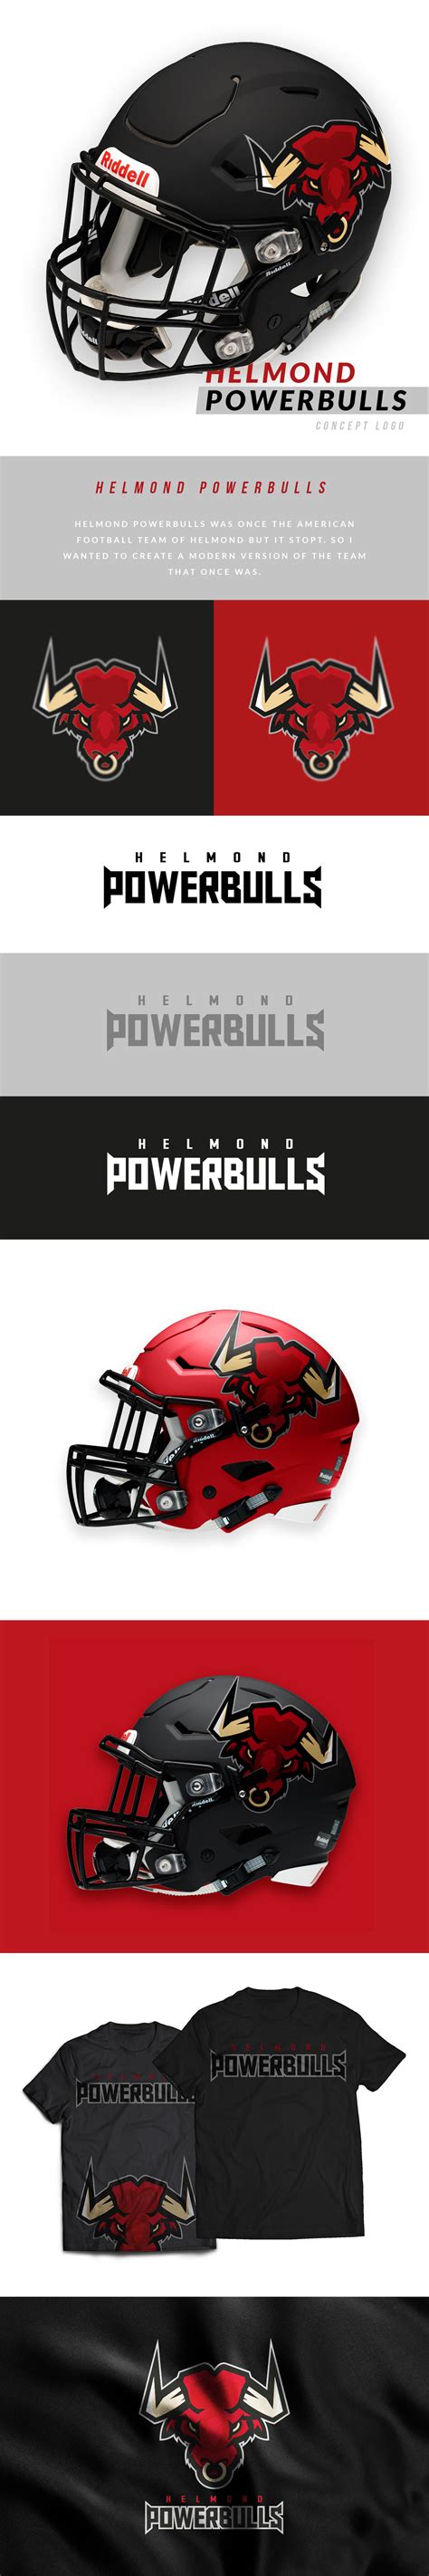 helmond powerbulls concept  behance sports decals sports logos typography design logo